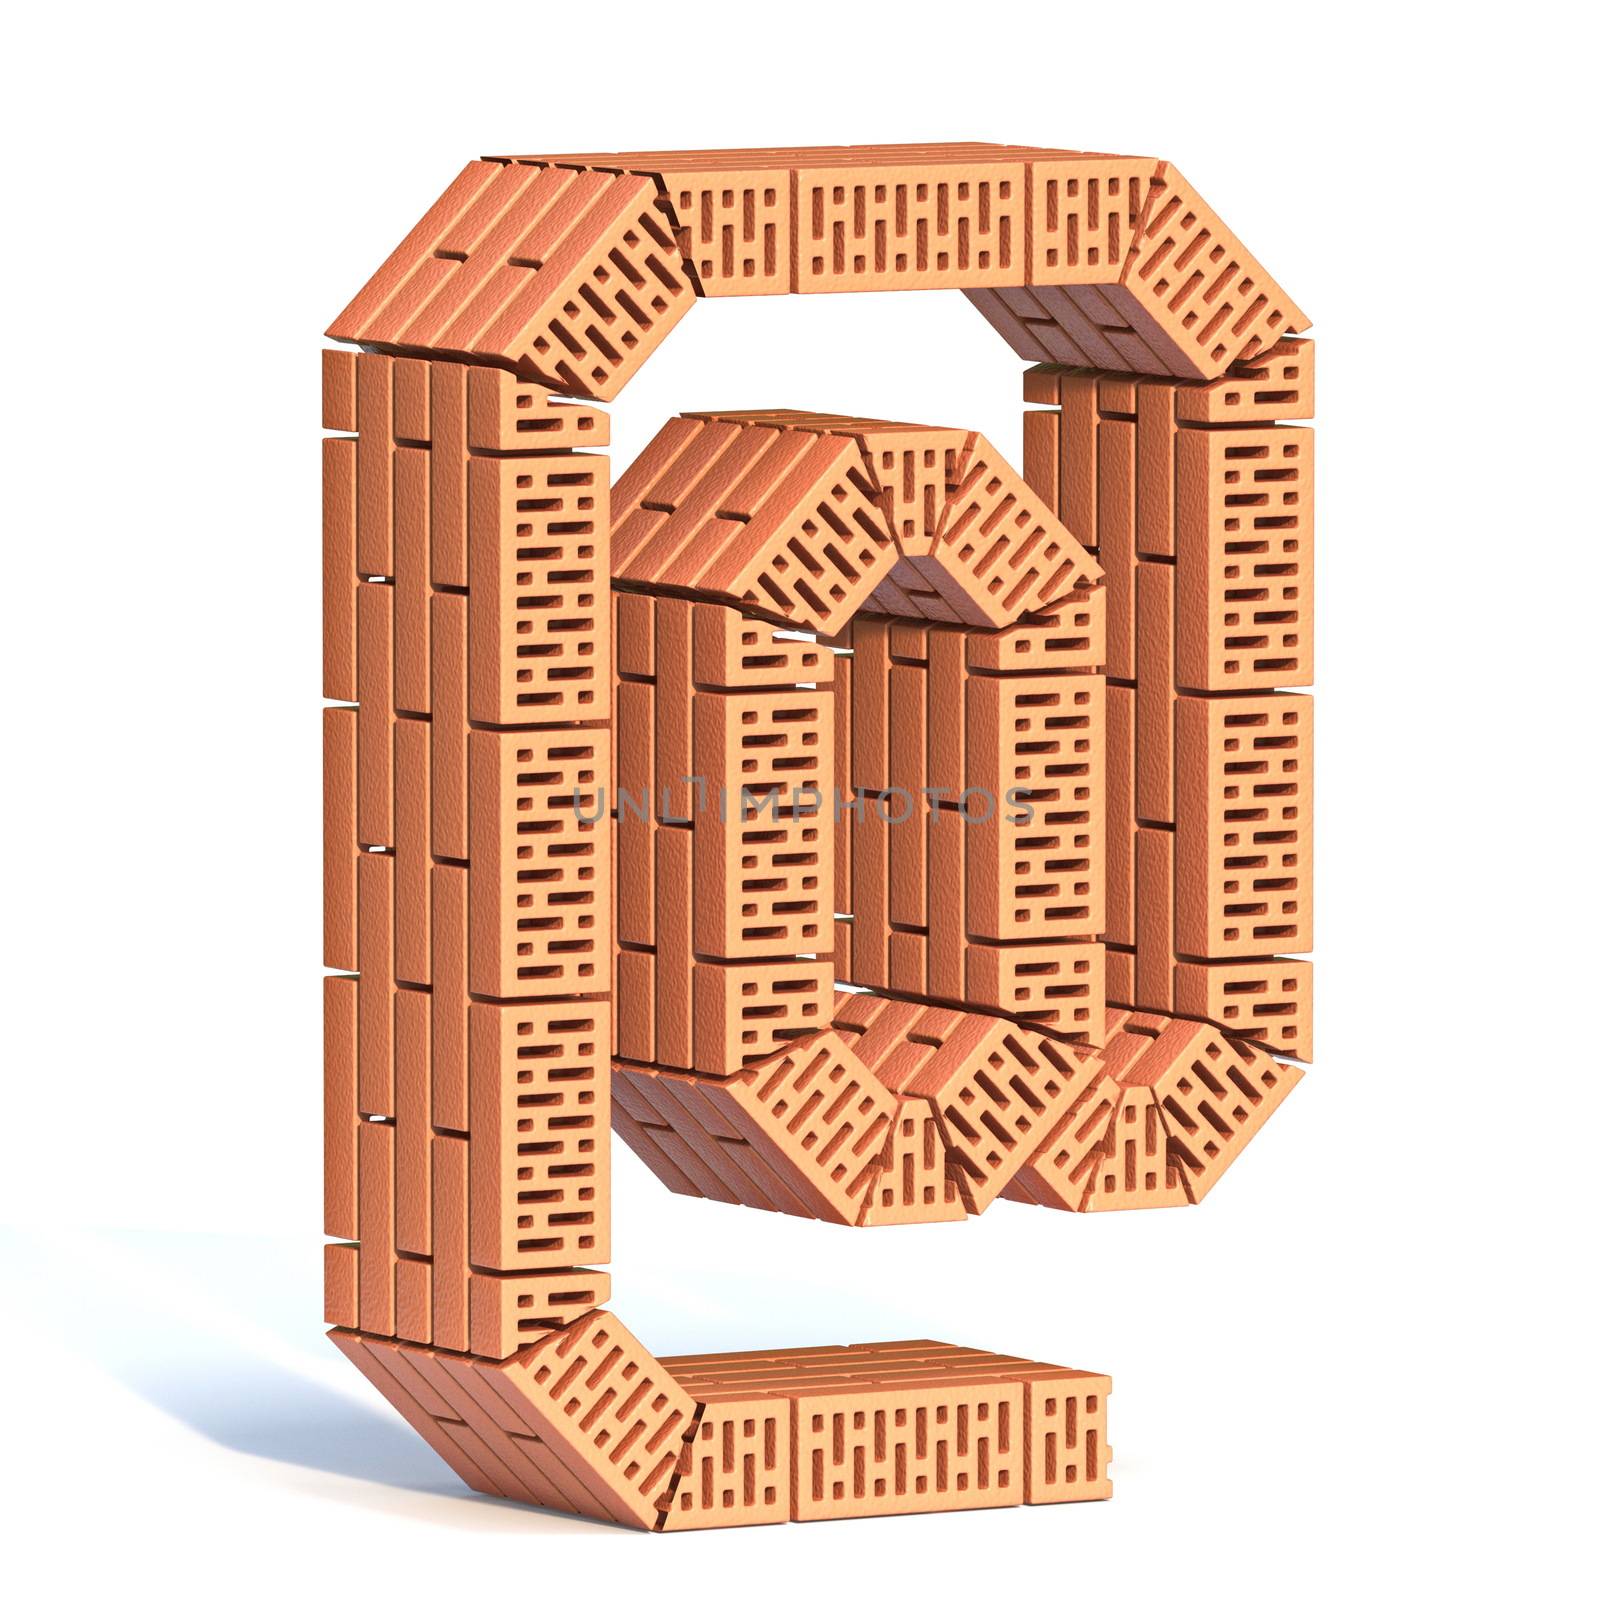 Brick wall font At symbol 3D by djmilic